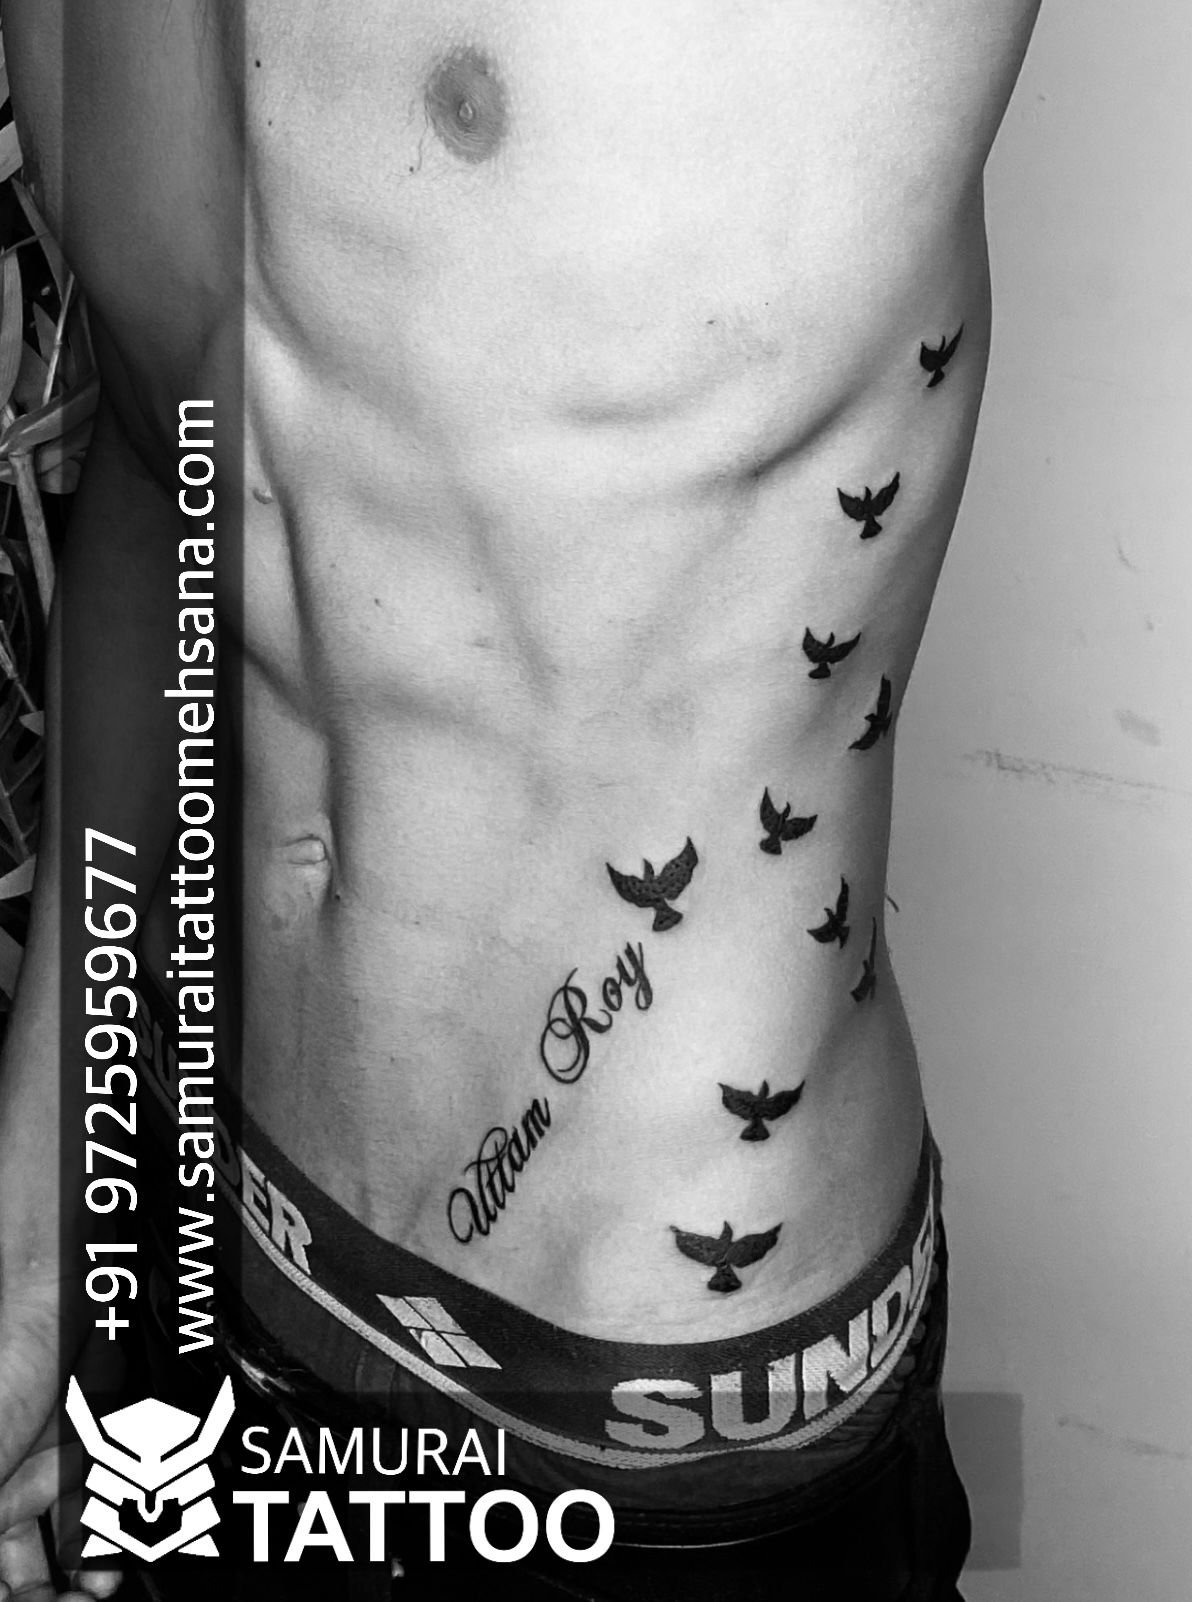 Tattoo uploaded by Vipul Chaudhary • Birds tattoo |Birds tattoo for boys  |boys tattoo design |Boys tattoo |Tattoo on neck |Neck tattoo for boys •  Tattoodo